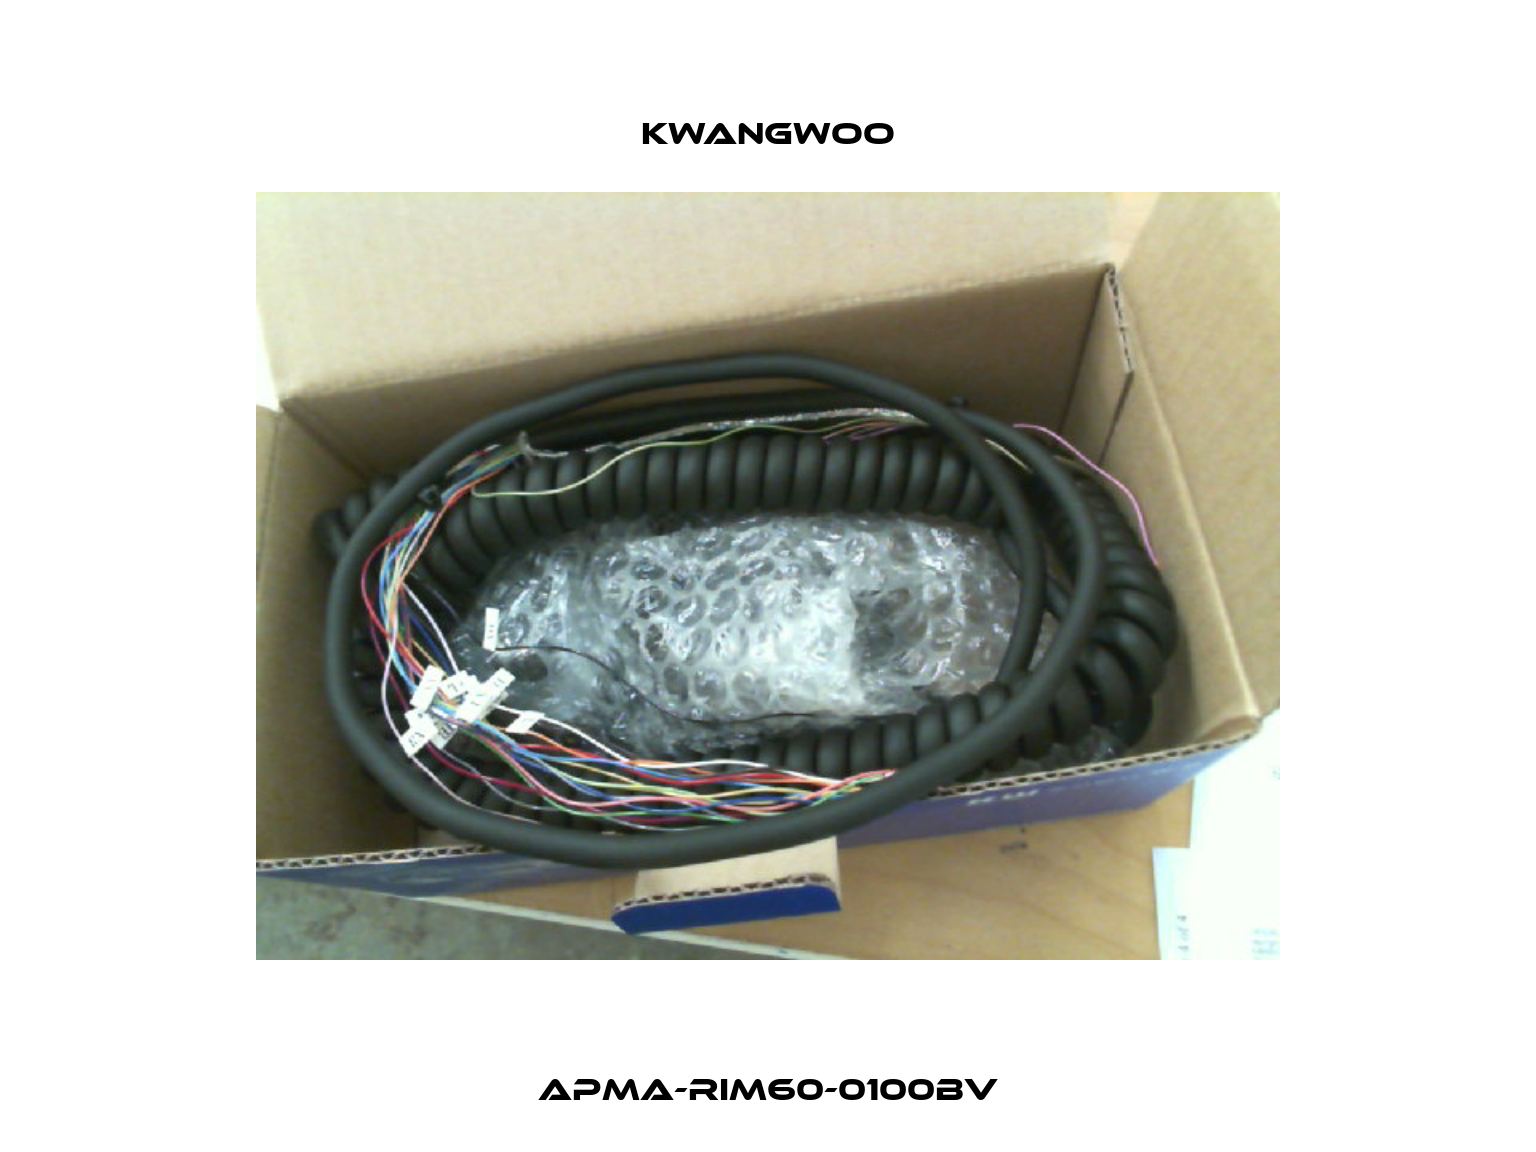 APMA-RIM60-0100BV Kwangwoo